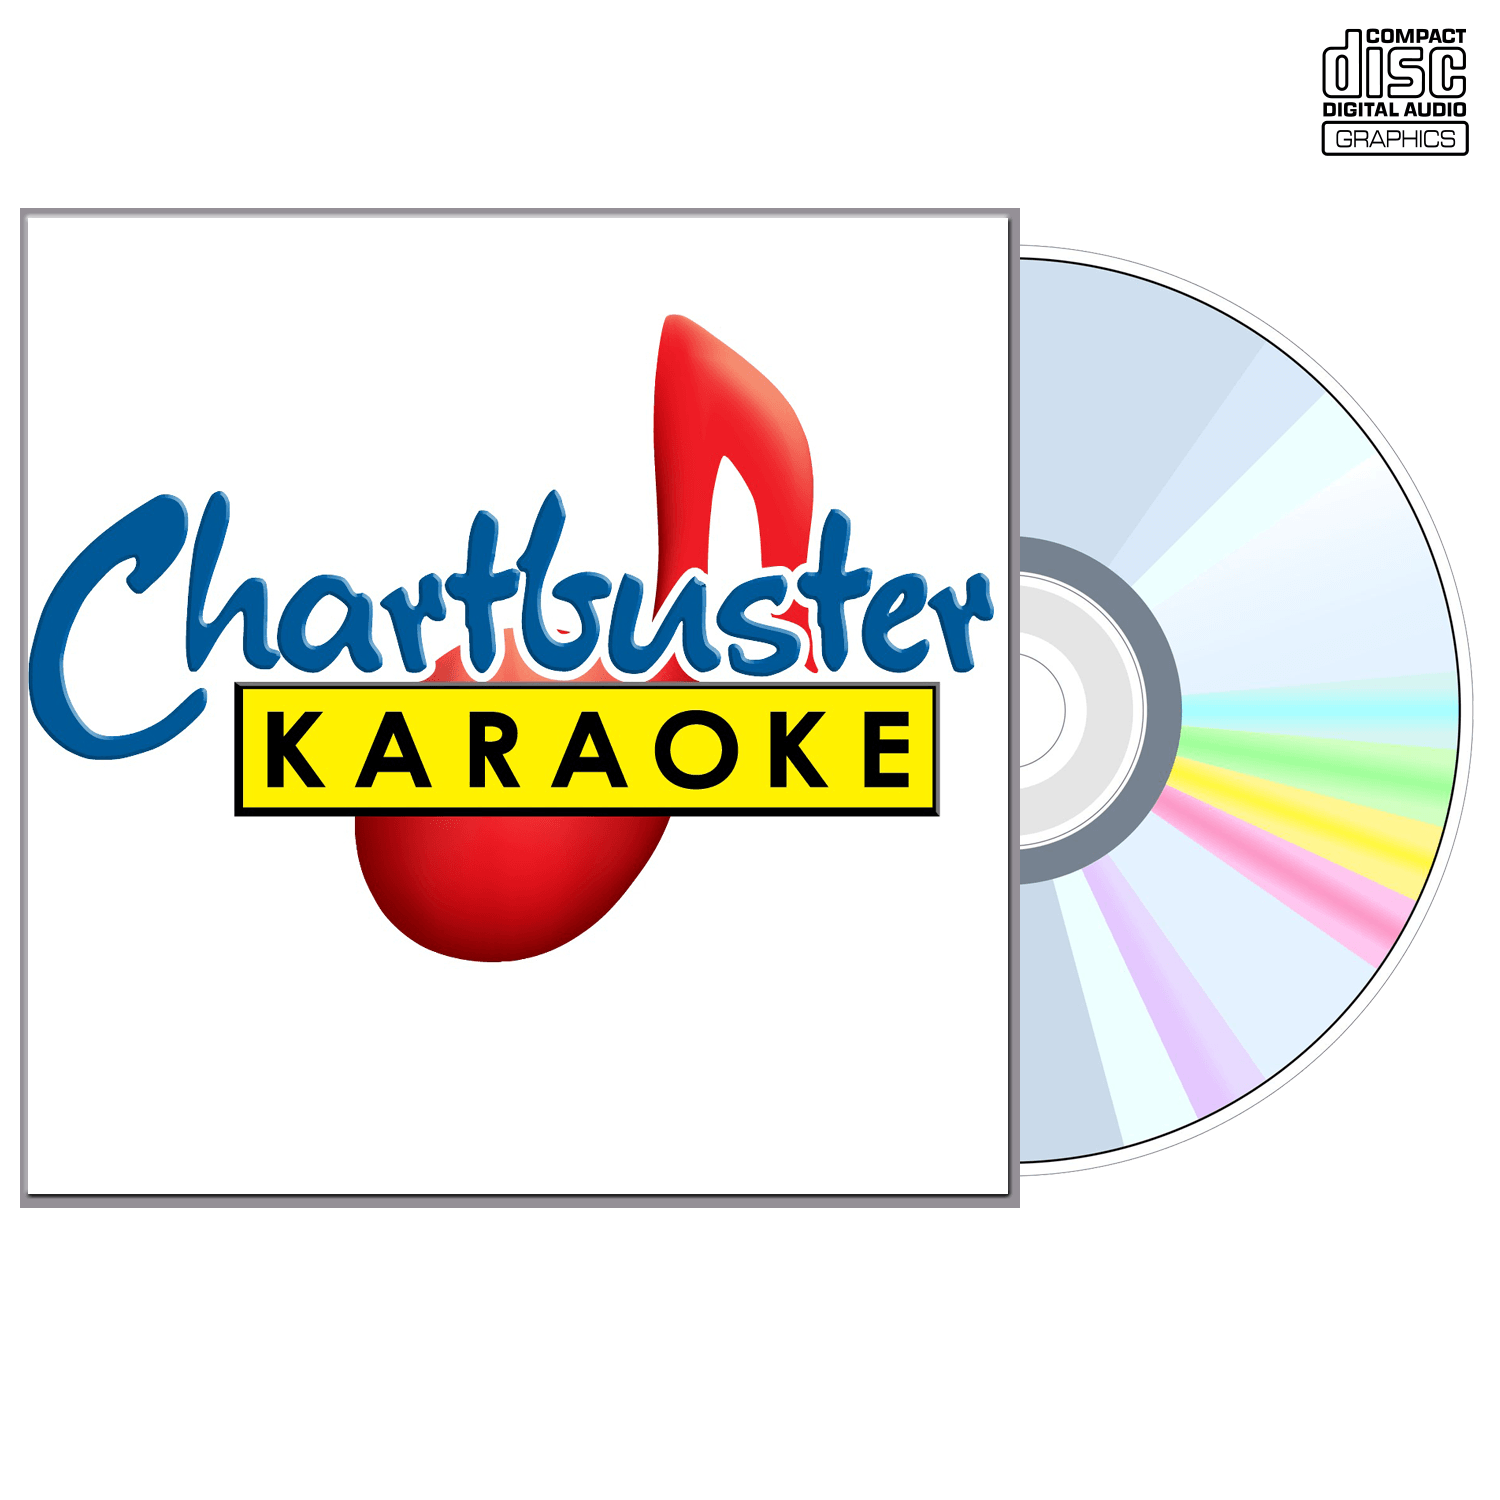 Danni Leigh - CD+G - Chartbuster Karaoke - Karaoke Home Entertainment